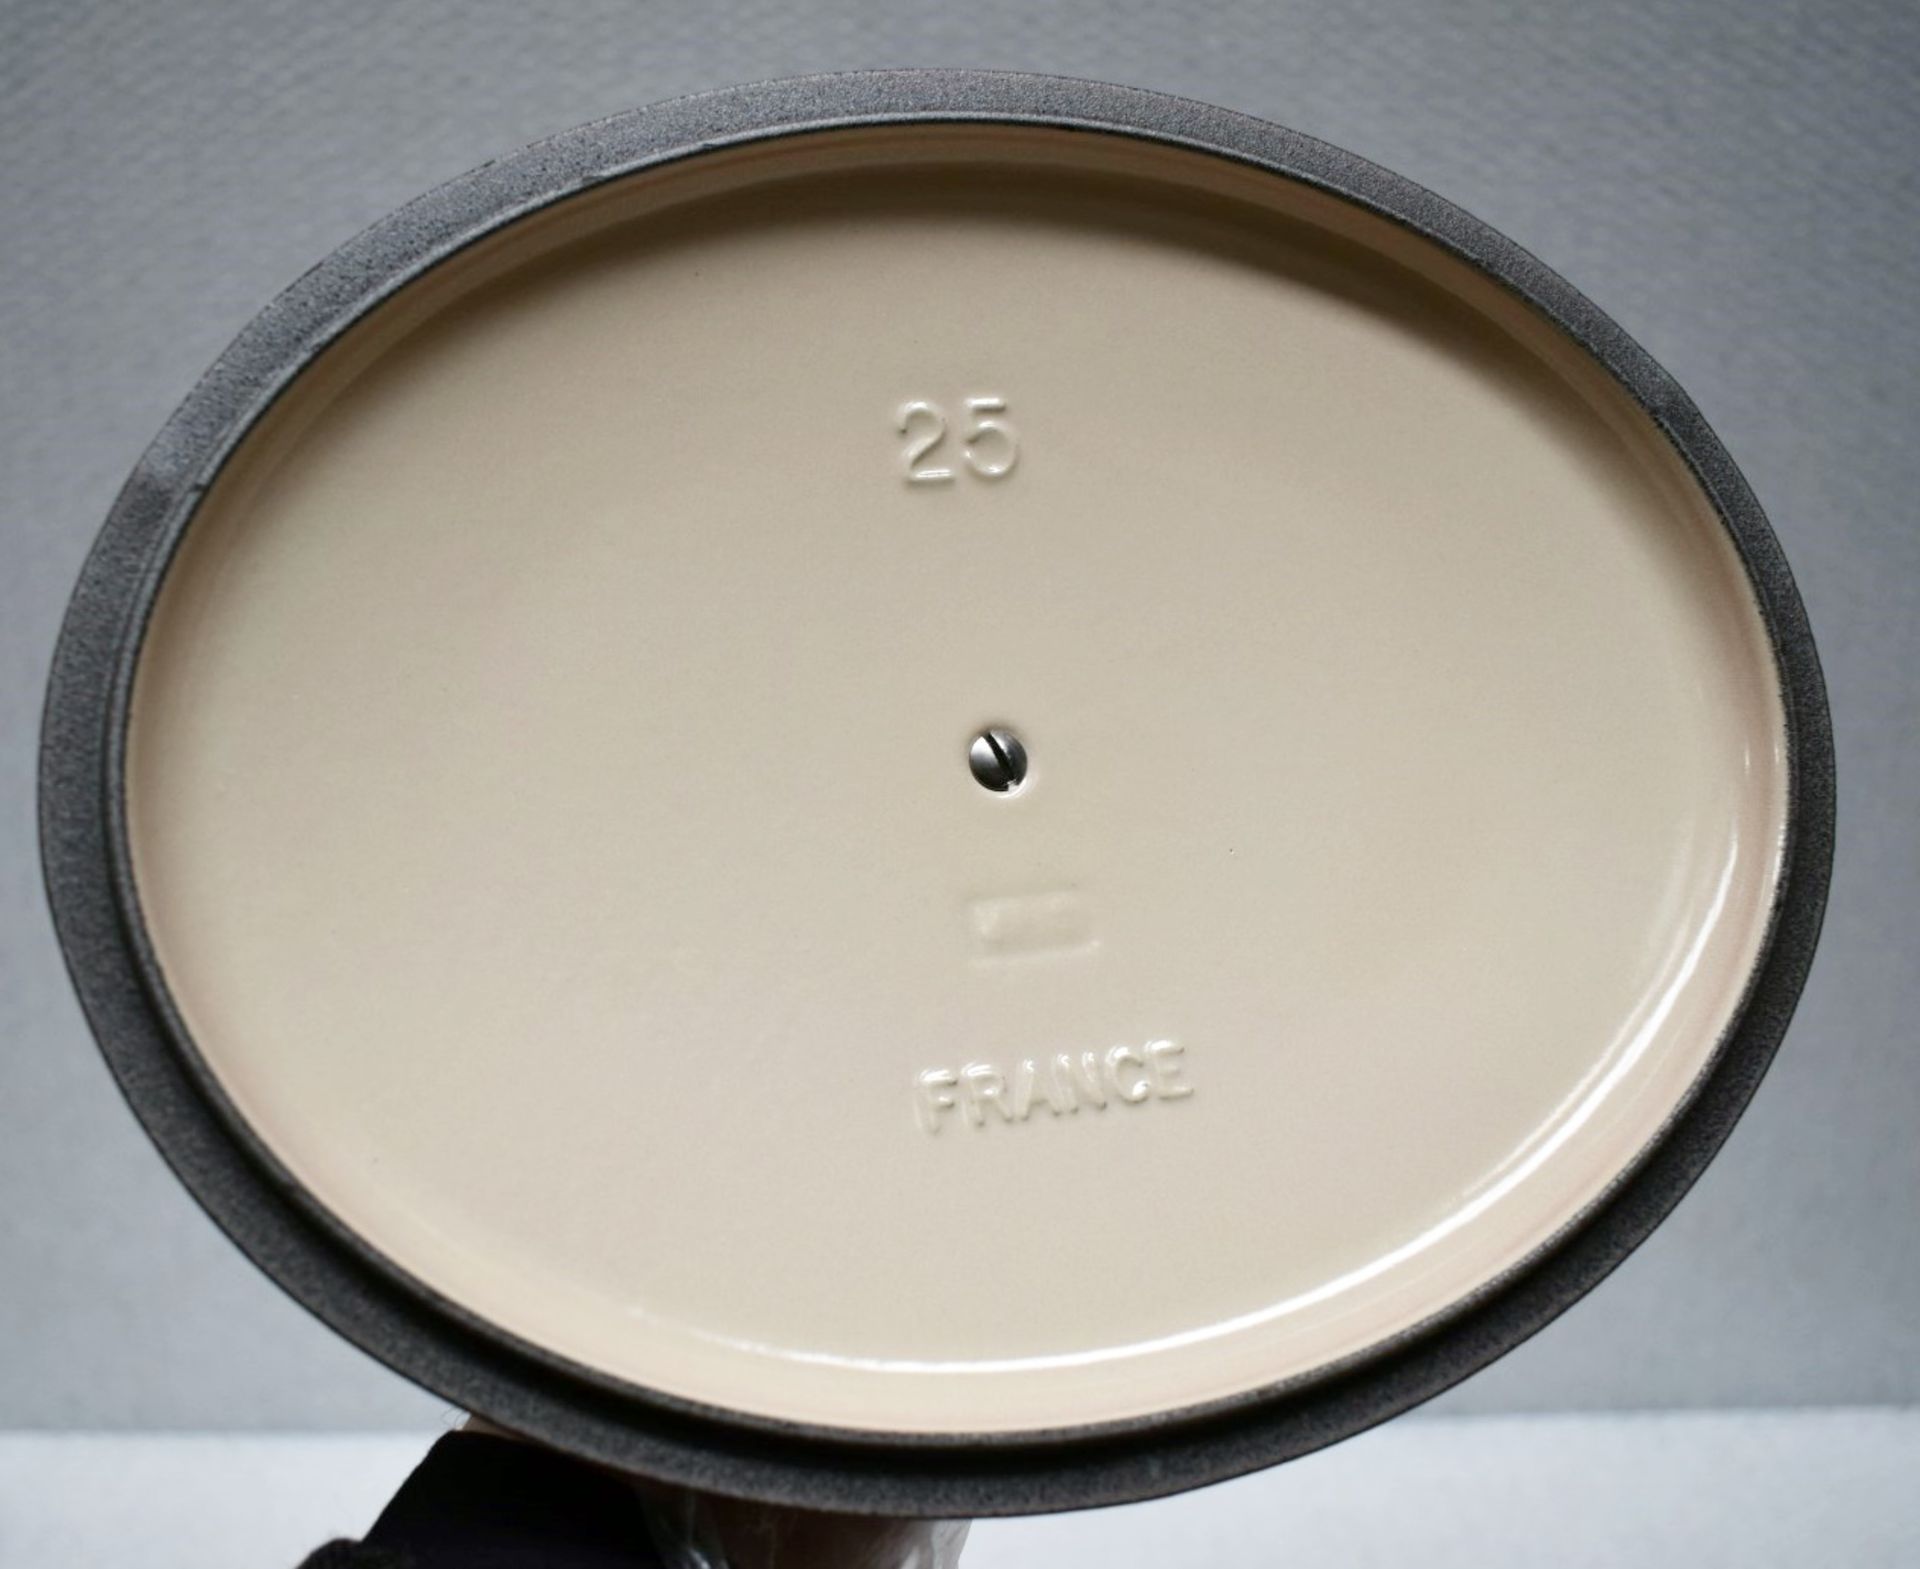 1 x LE CREUSET 'Signature' Enamelled Cast Iron 25cm Oval Casserole Dish In Cerise - RRP £235.00 - Image 11 of 11